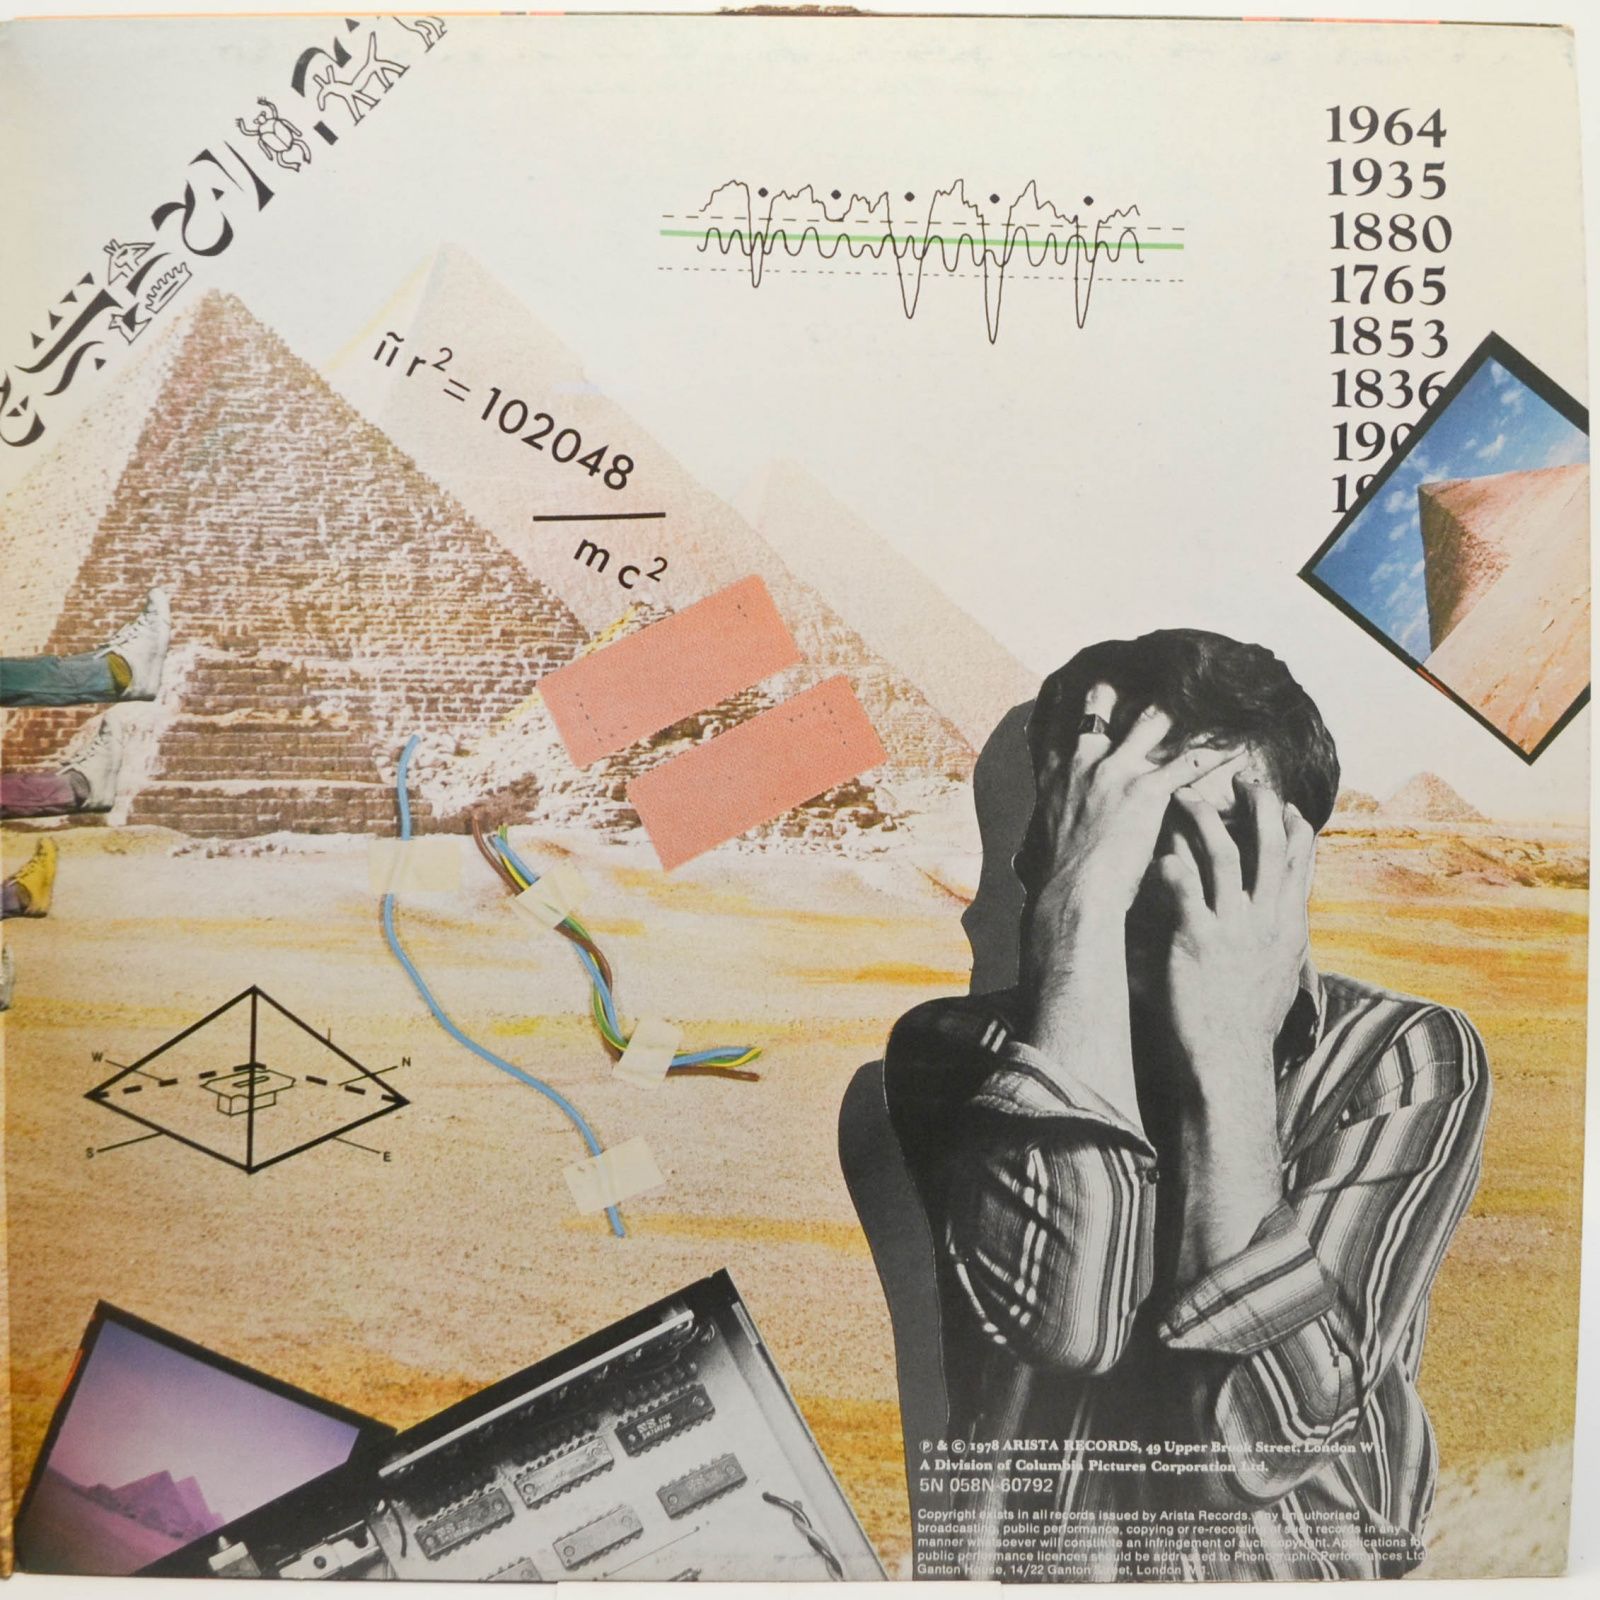 Alan Parsons Project — Pyramid, 1978